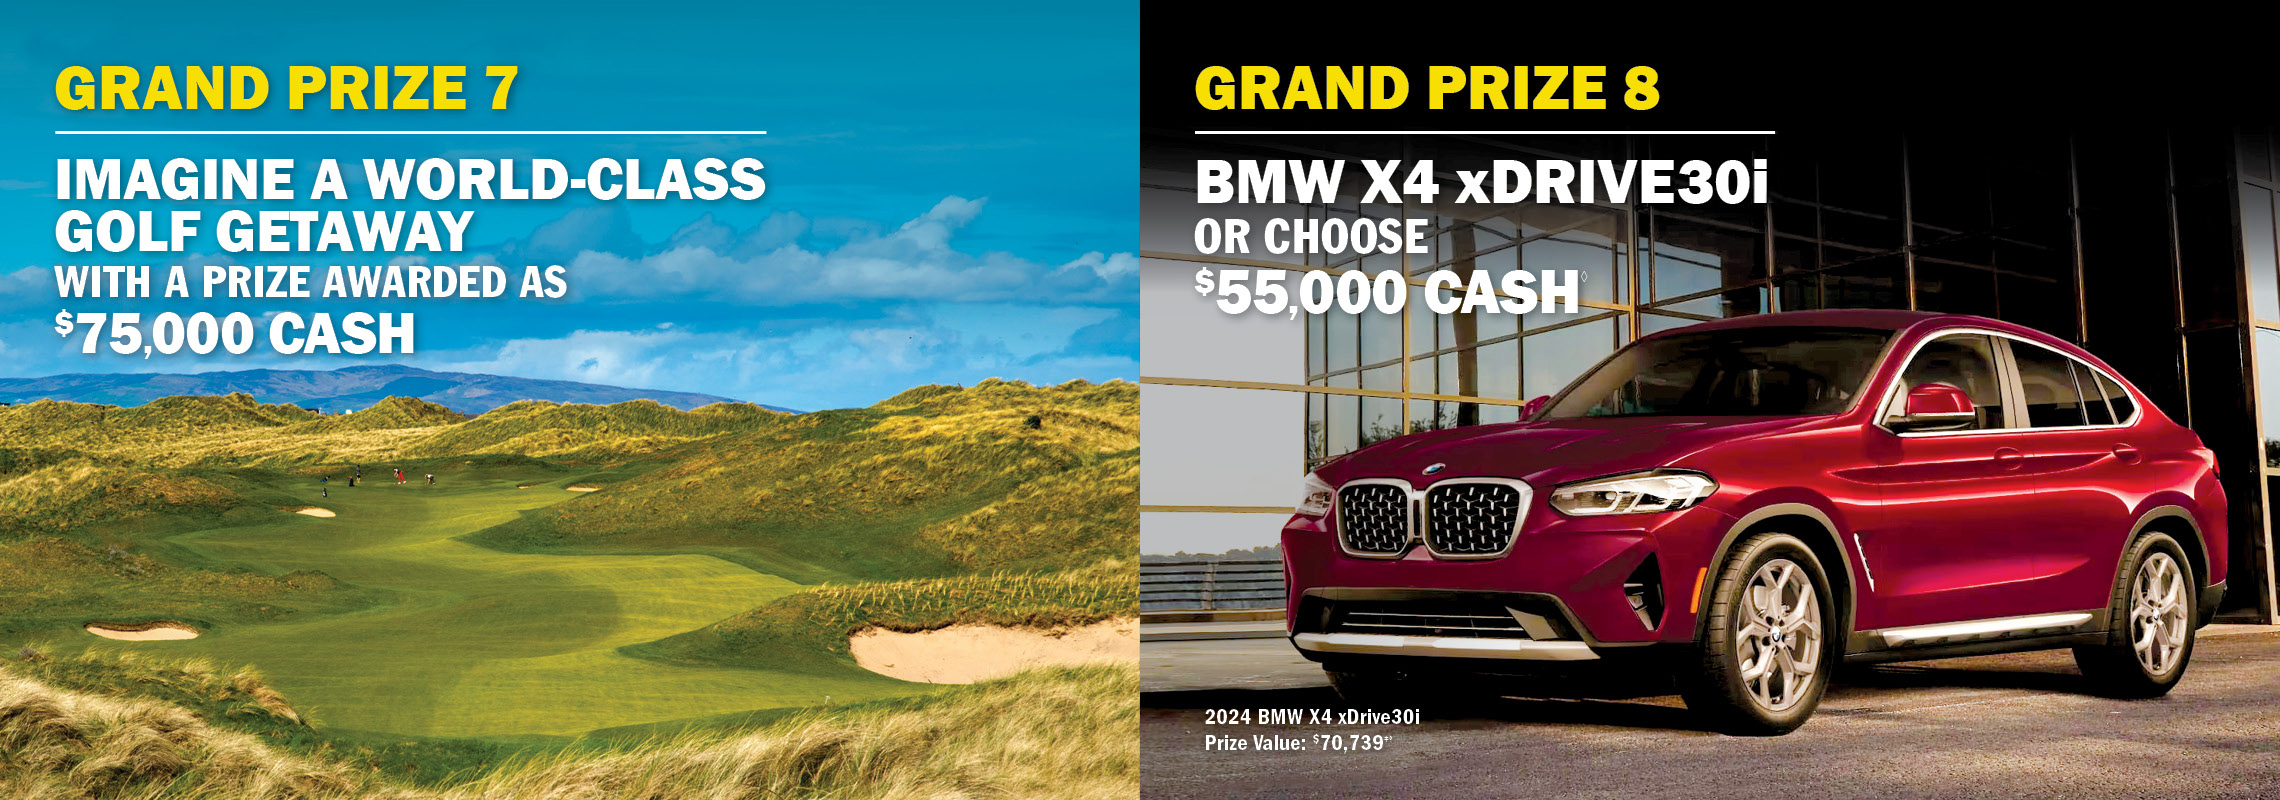 Grand Prize 7 - Golf getaway awarded as $75,000 cash. Grand Prize 8 - BMW X4 xDrive 30i or $55,000 cash.